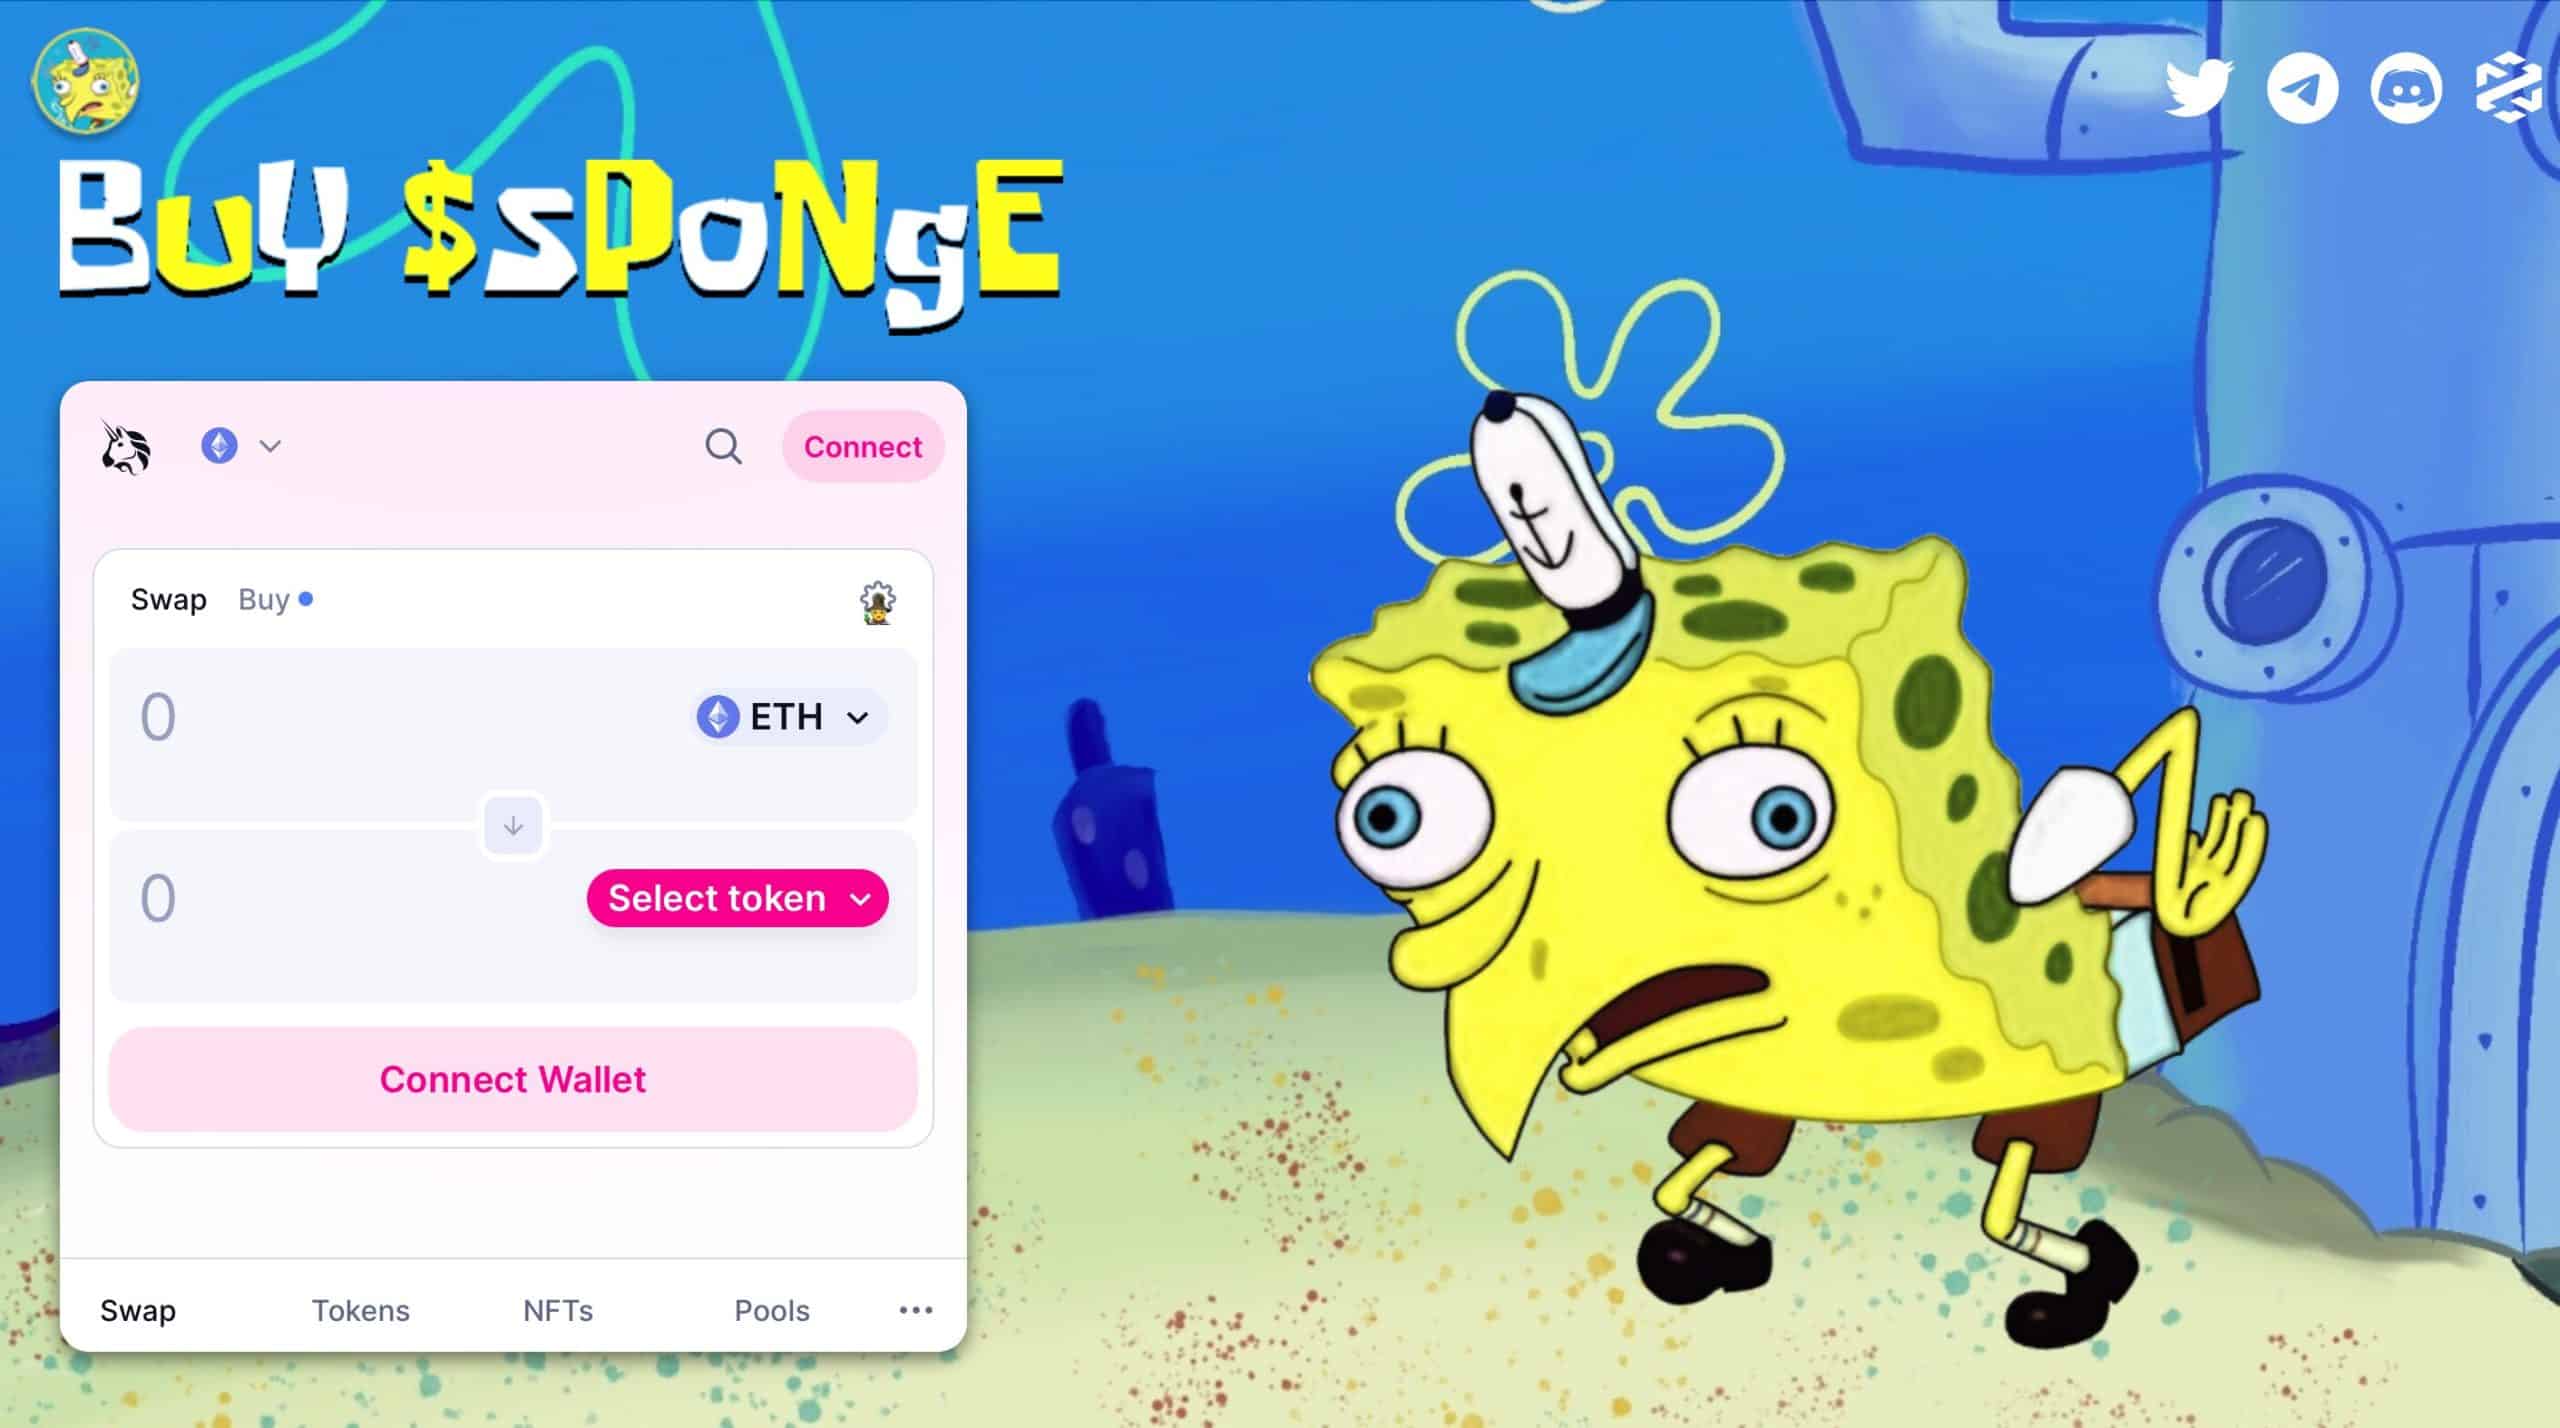 spongebob-sponge-main